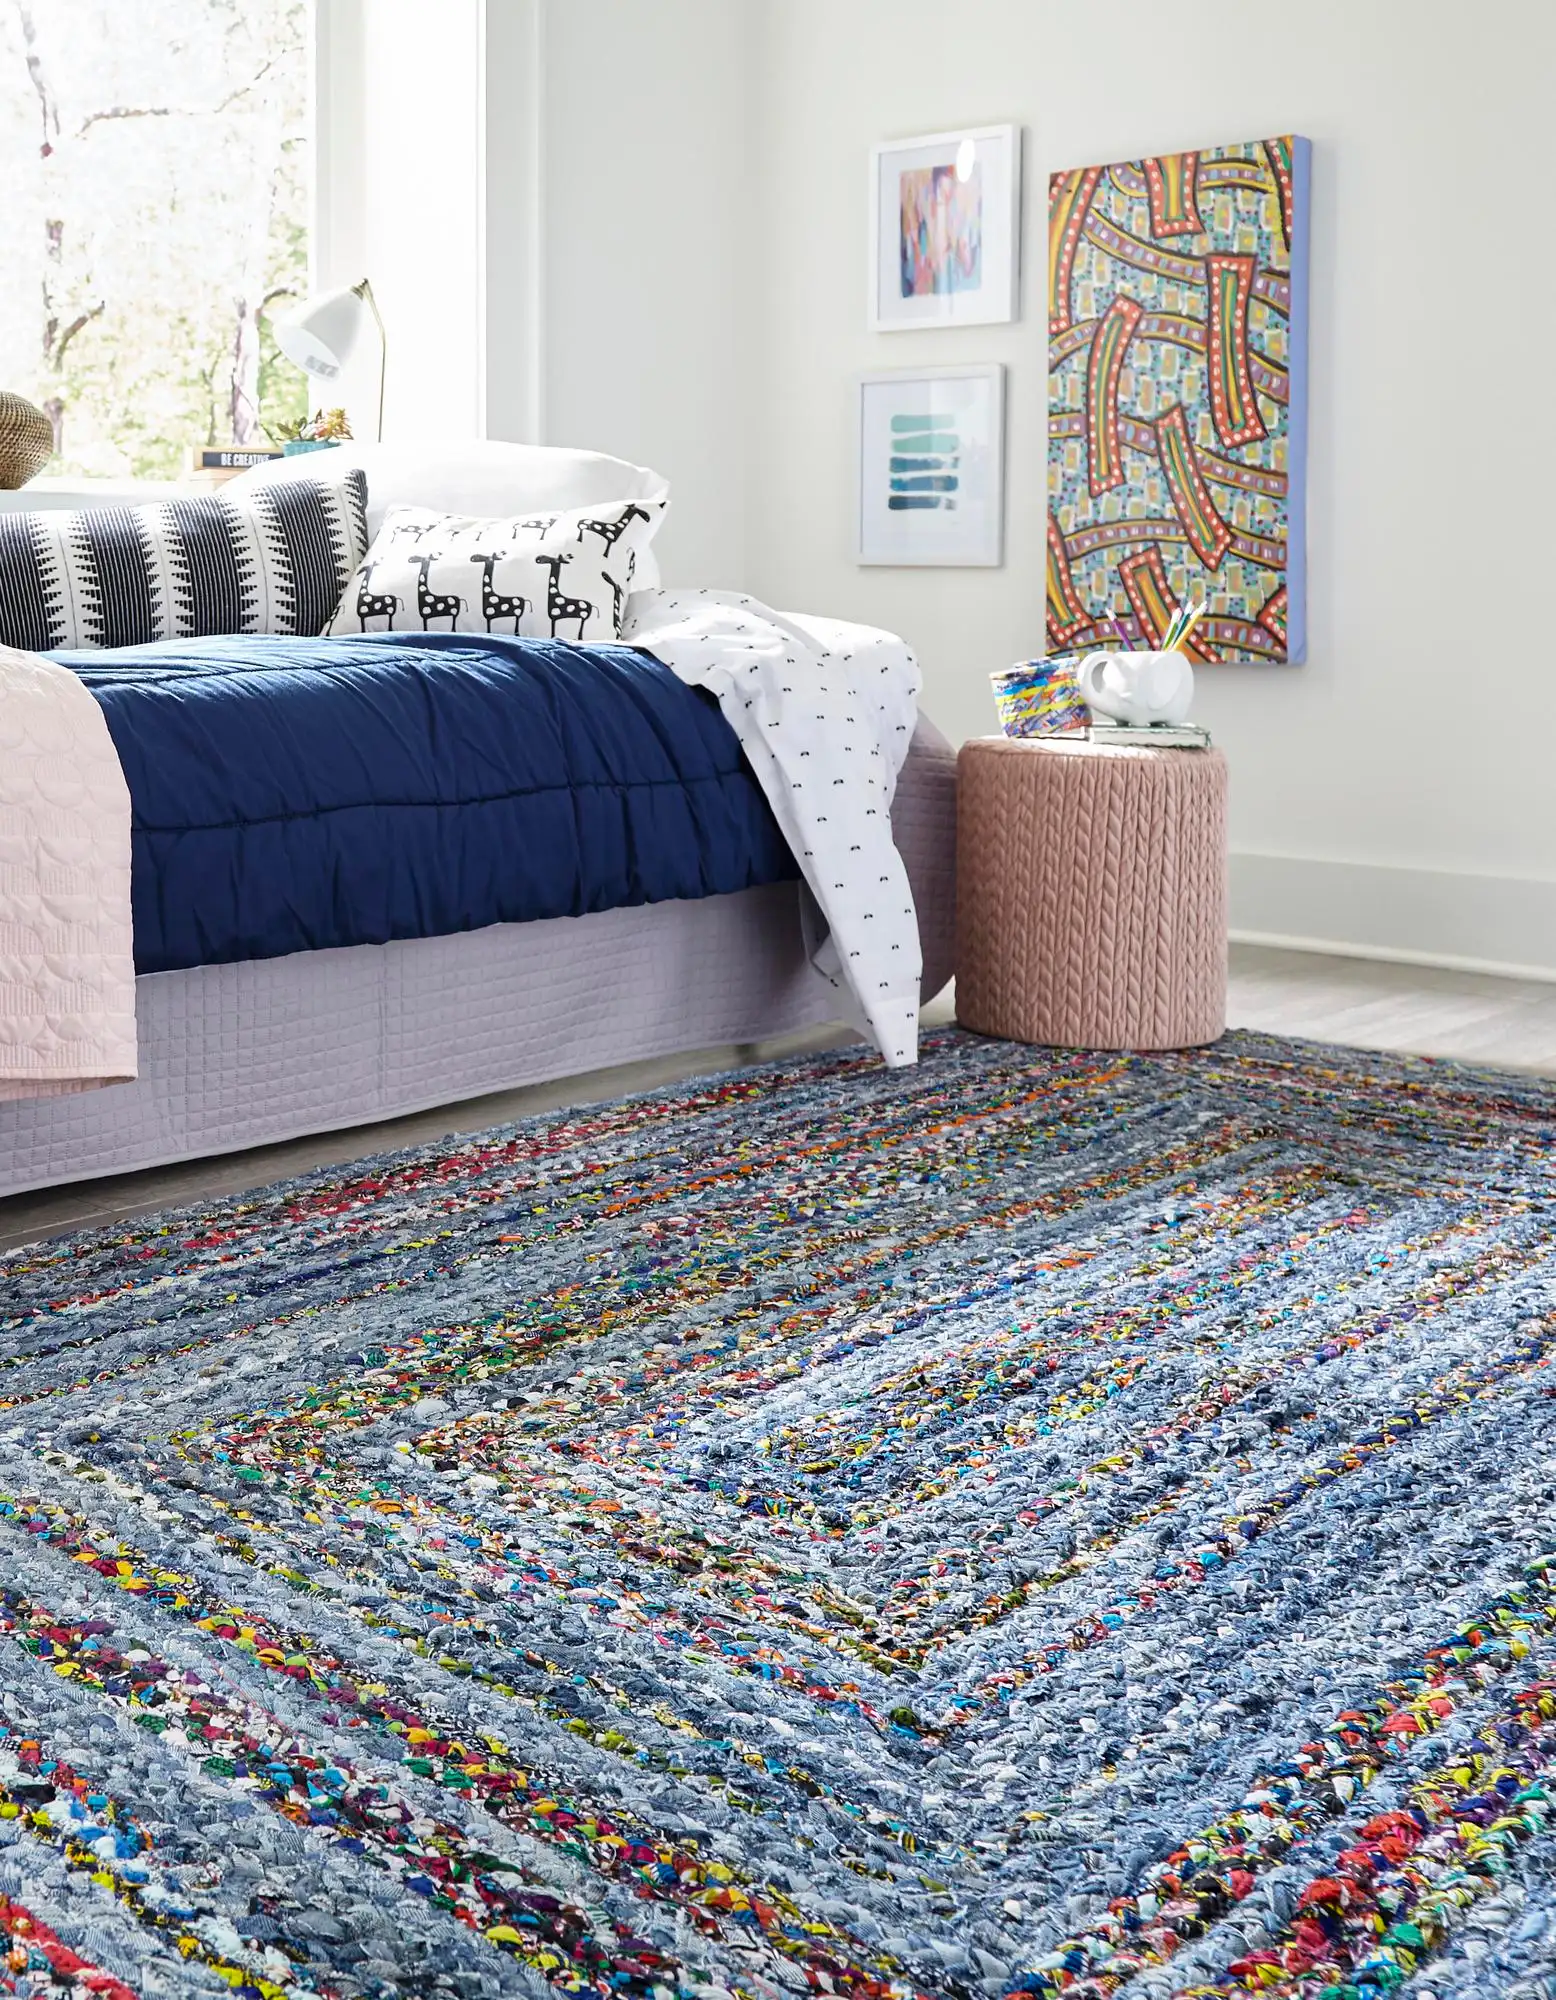 Jute Floor Mat With Beige and Blue Rectangular Shape- 4 X 6 FT Carpet! Jeans and Jute rectangle shape carpet runner